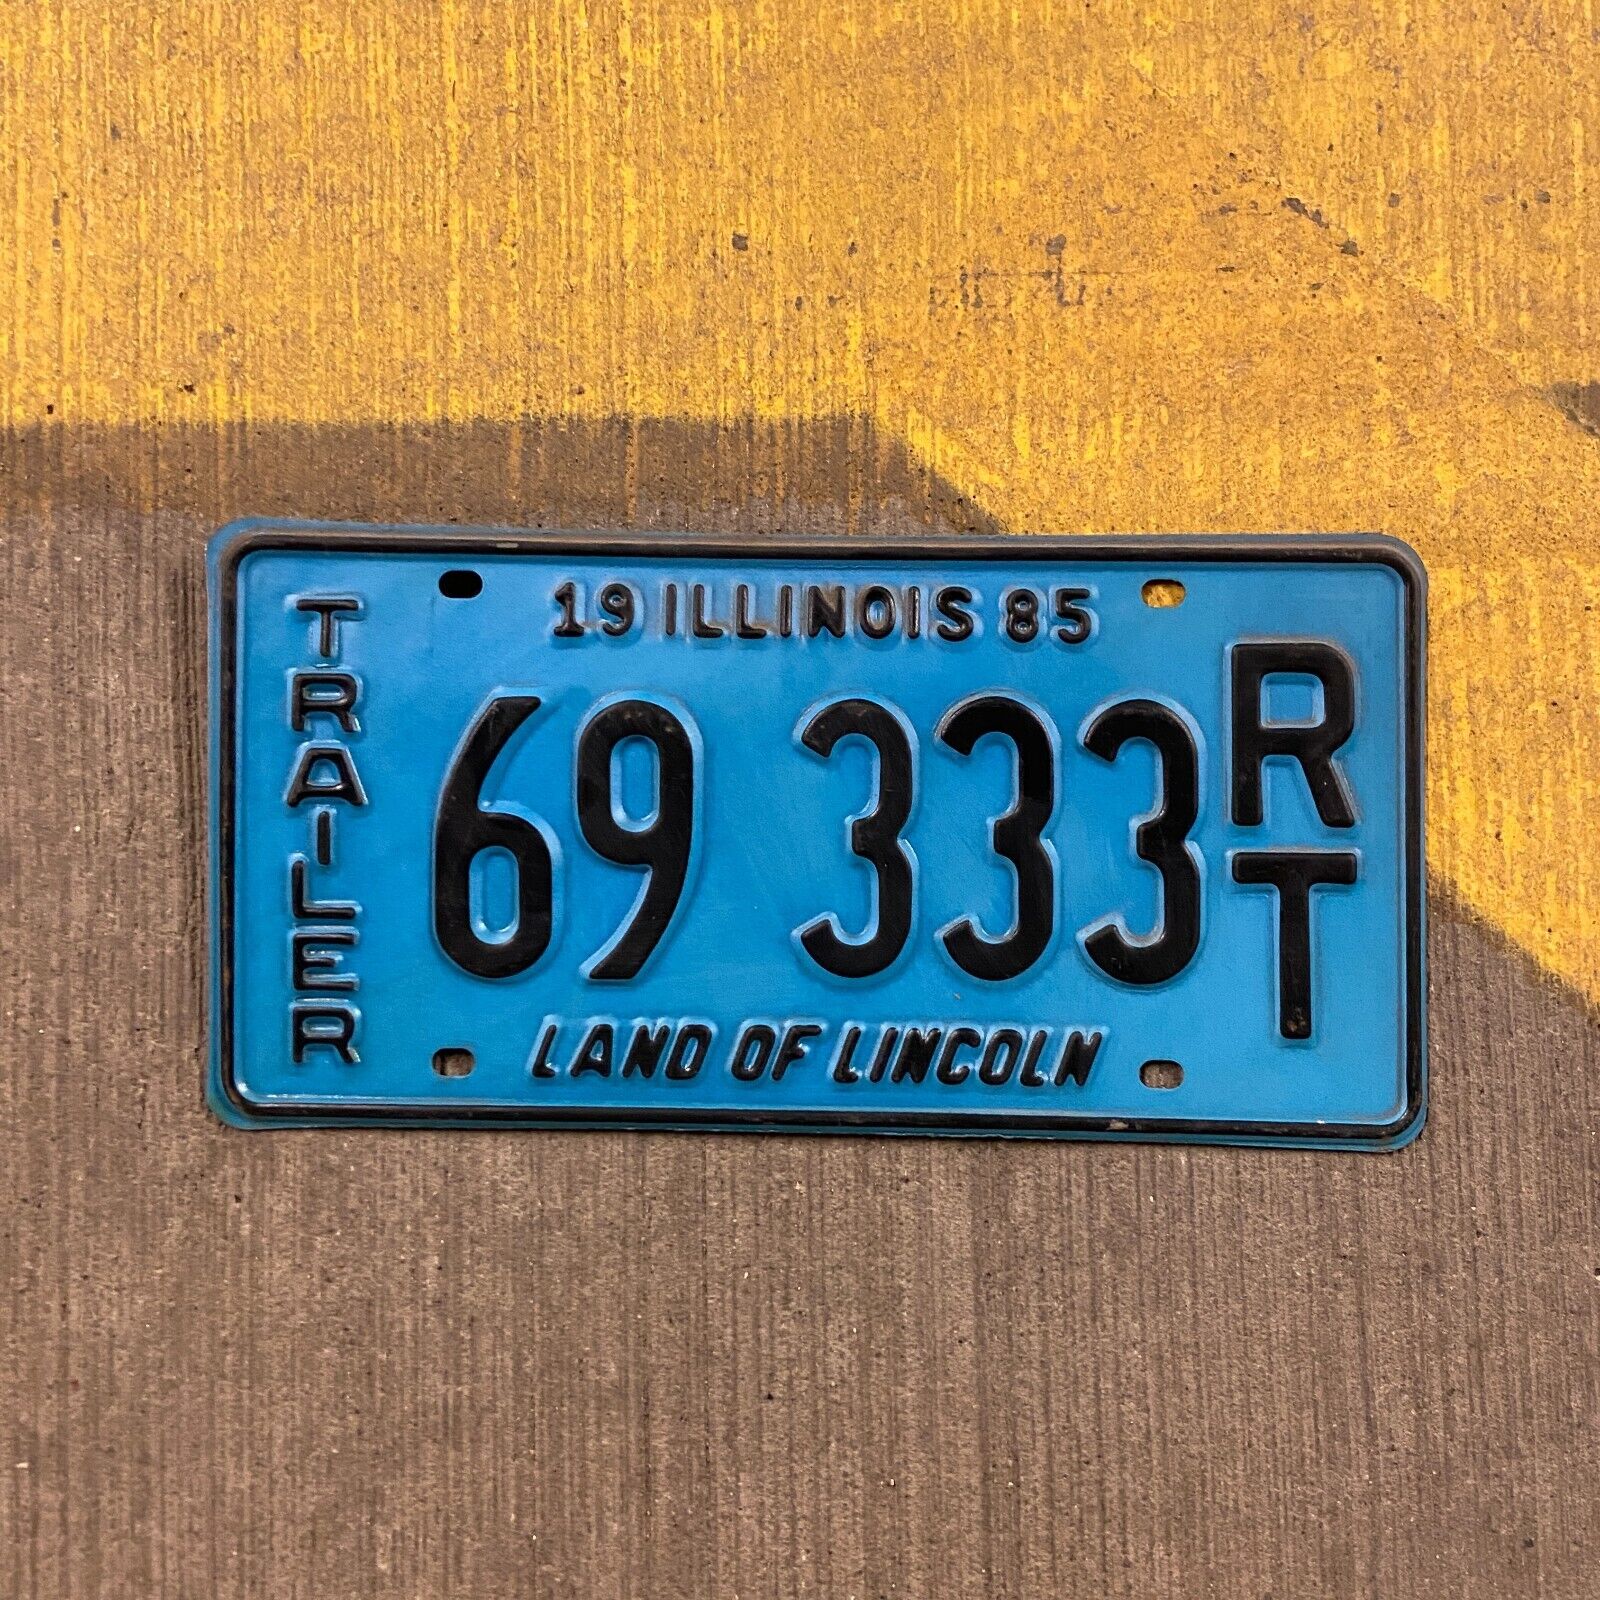 1985 Illinois TRAILER License Plate Garage Auto Tag Car Repeat Repeating 69 333